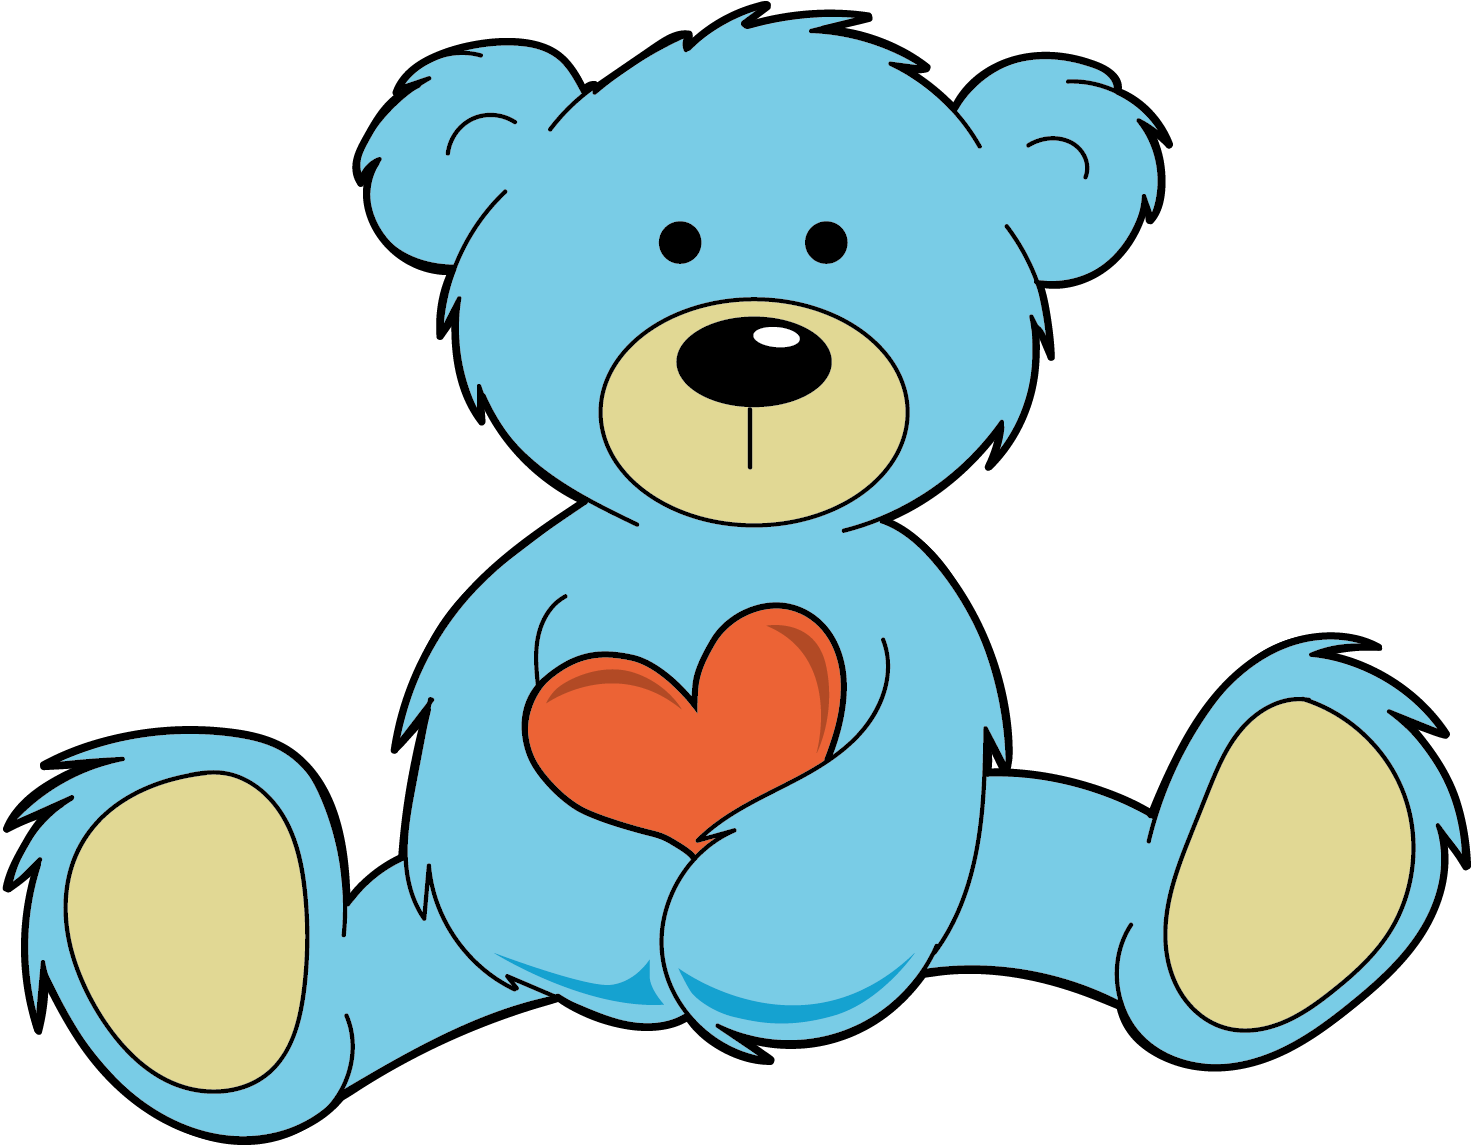 Fuzzy blue teddy bear holding red heart.